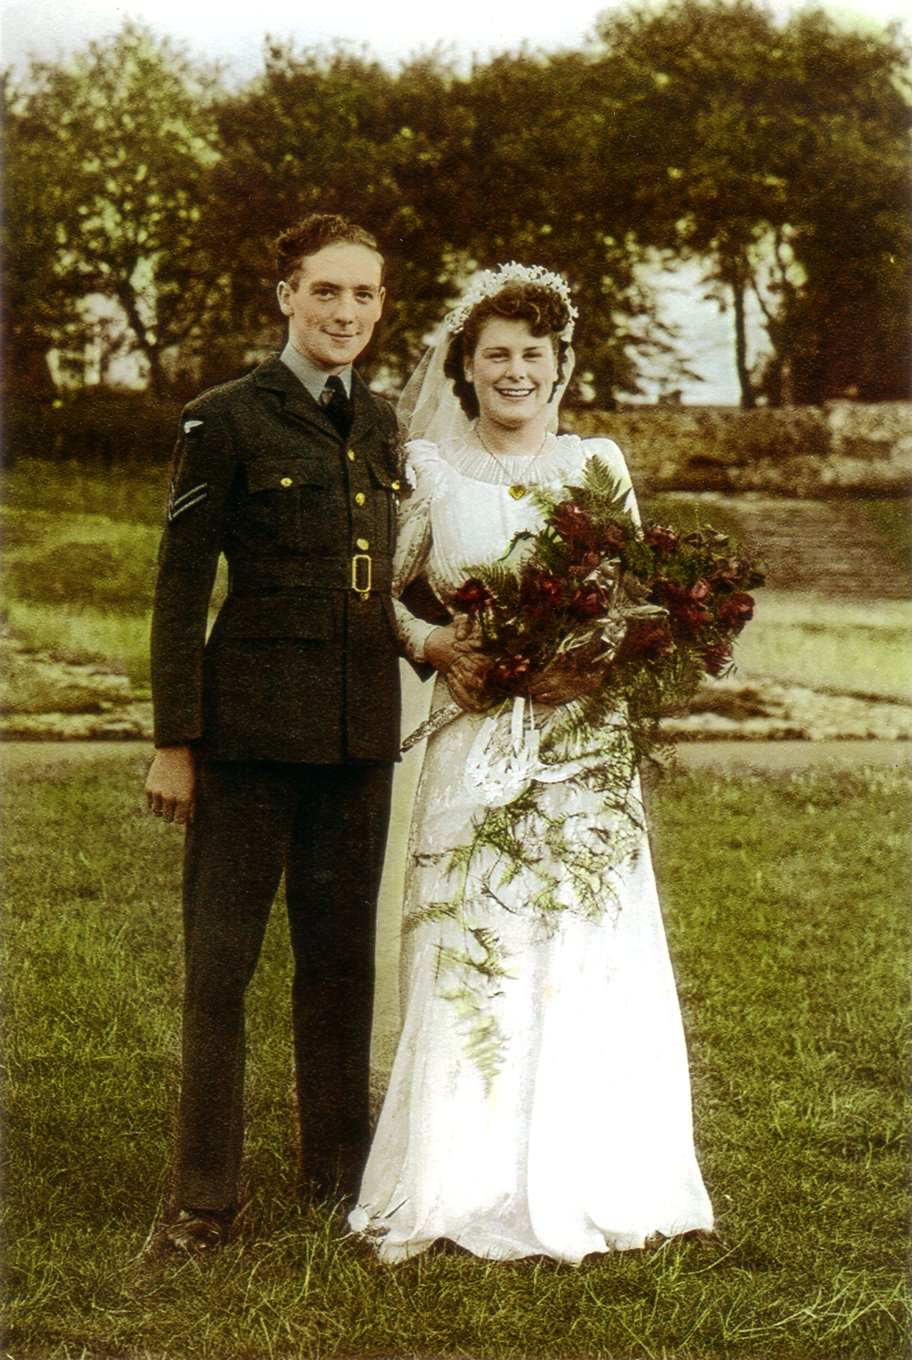 George and Joan Piggott on their wedding day